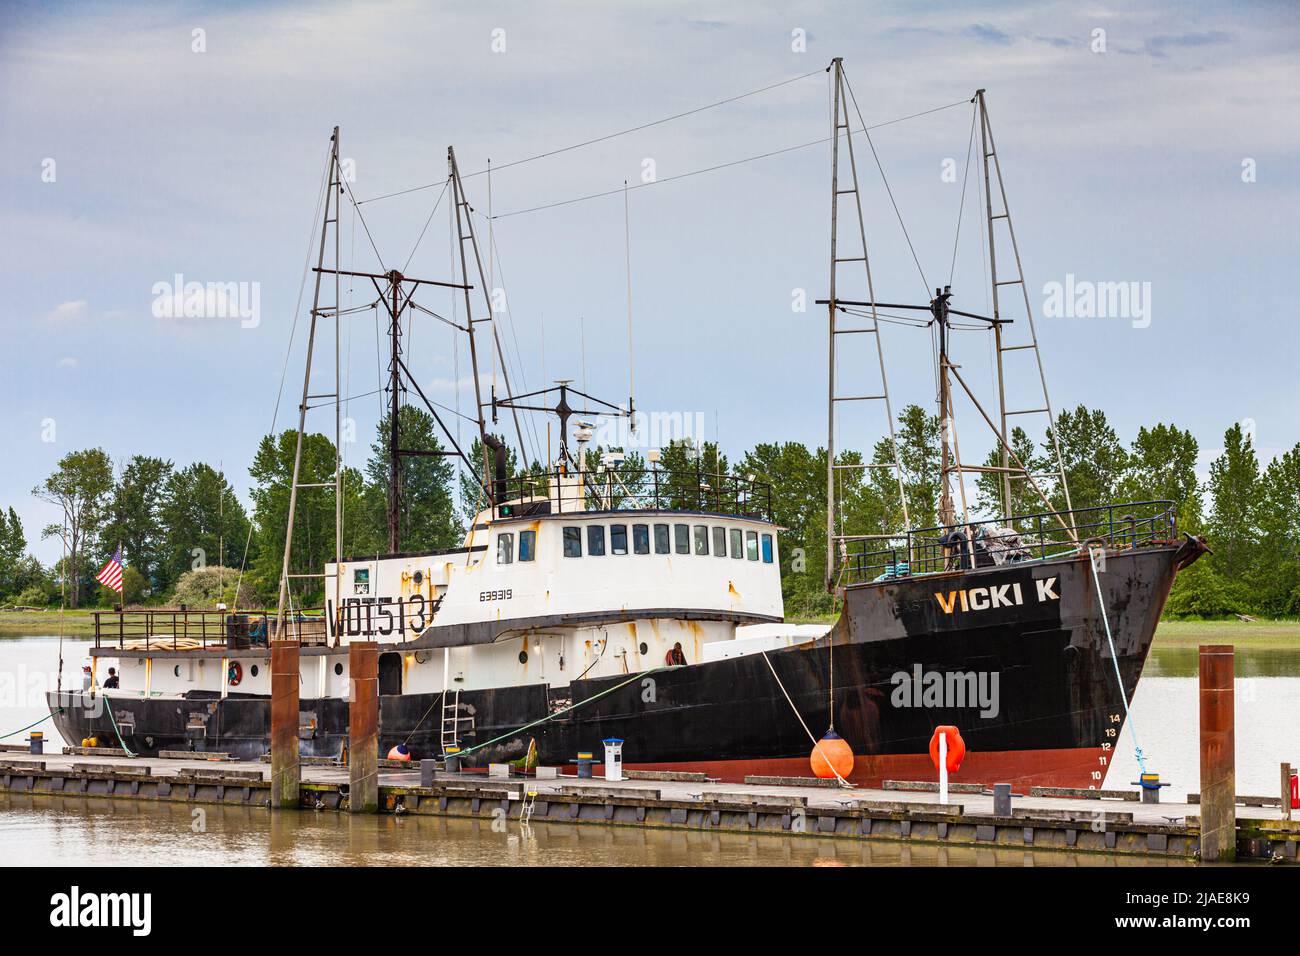 An American fishing vessel Vicki K docked in Steveston Canada before heading north to Alaska Stock Photo